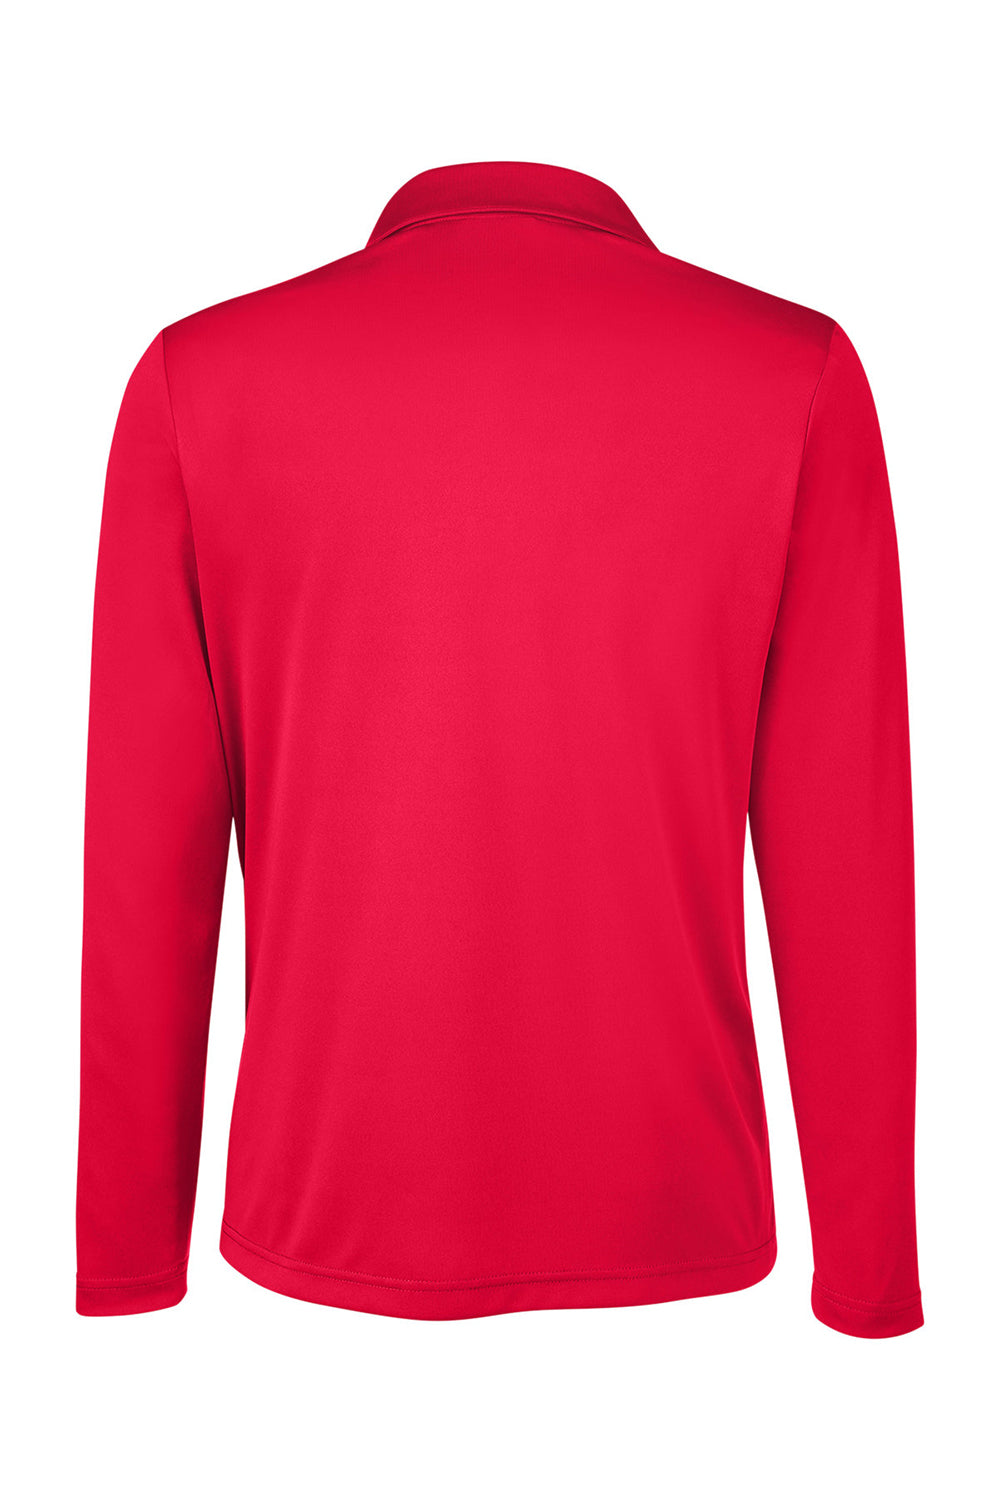 Team 365 TT51LW Womens Zone Sonic Moisture Wicking Long Sleeve Polo Shirt Red Flat Back